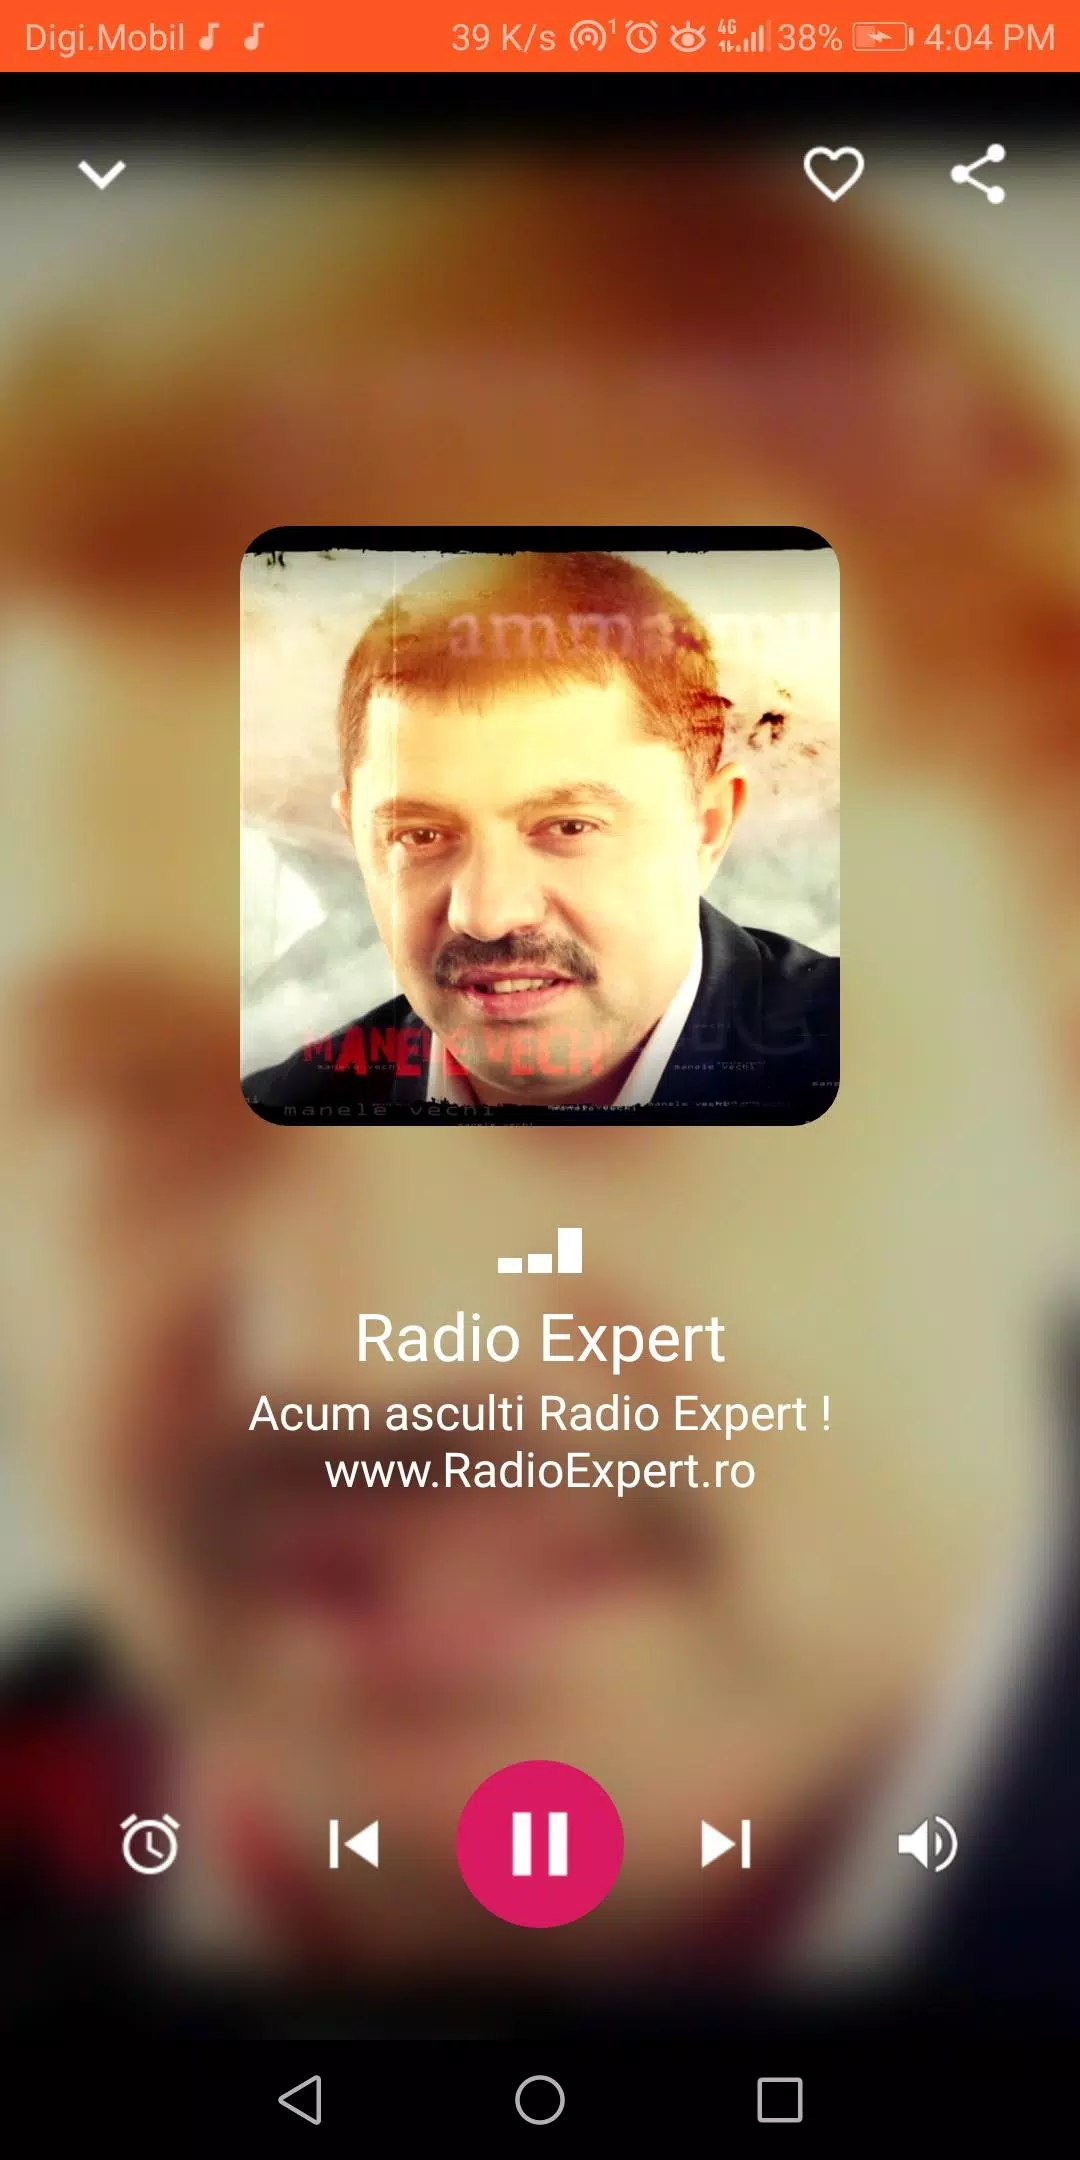 Radio Manele Live for Android - APK Download